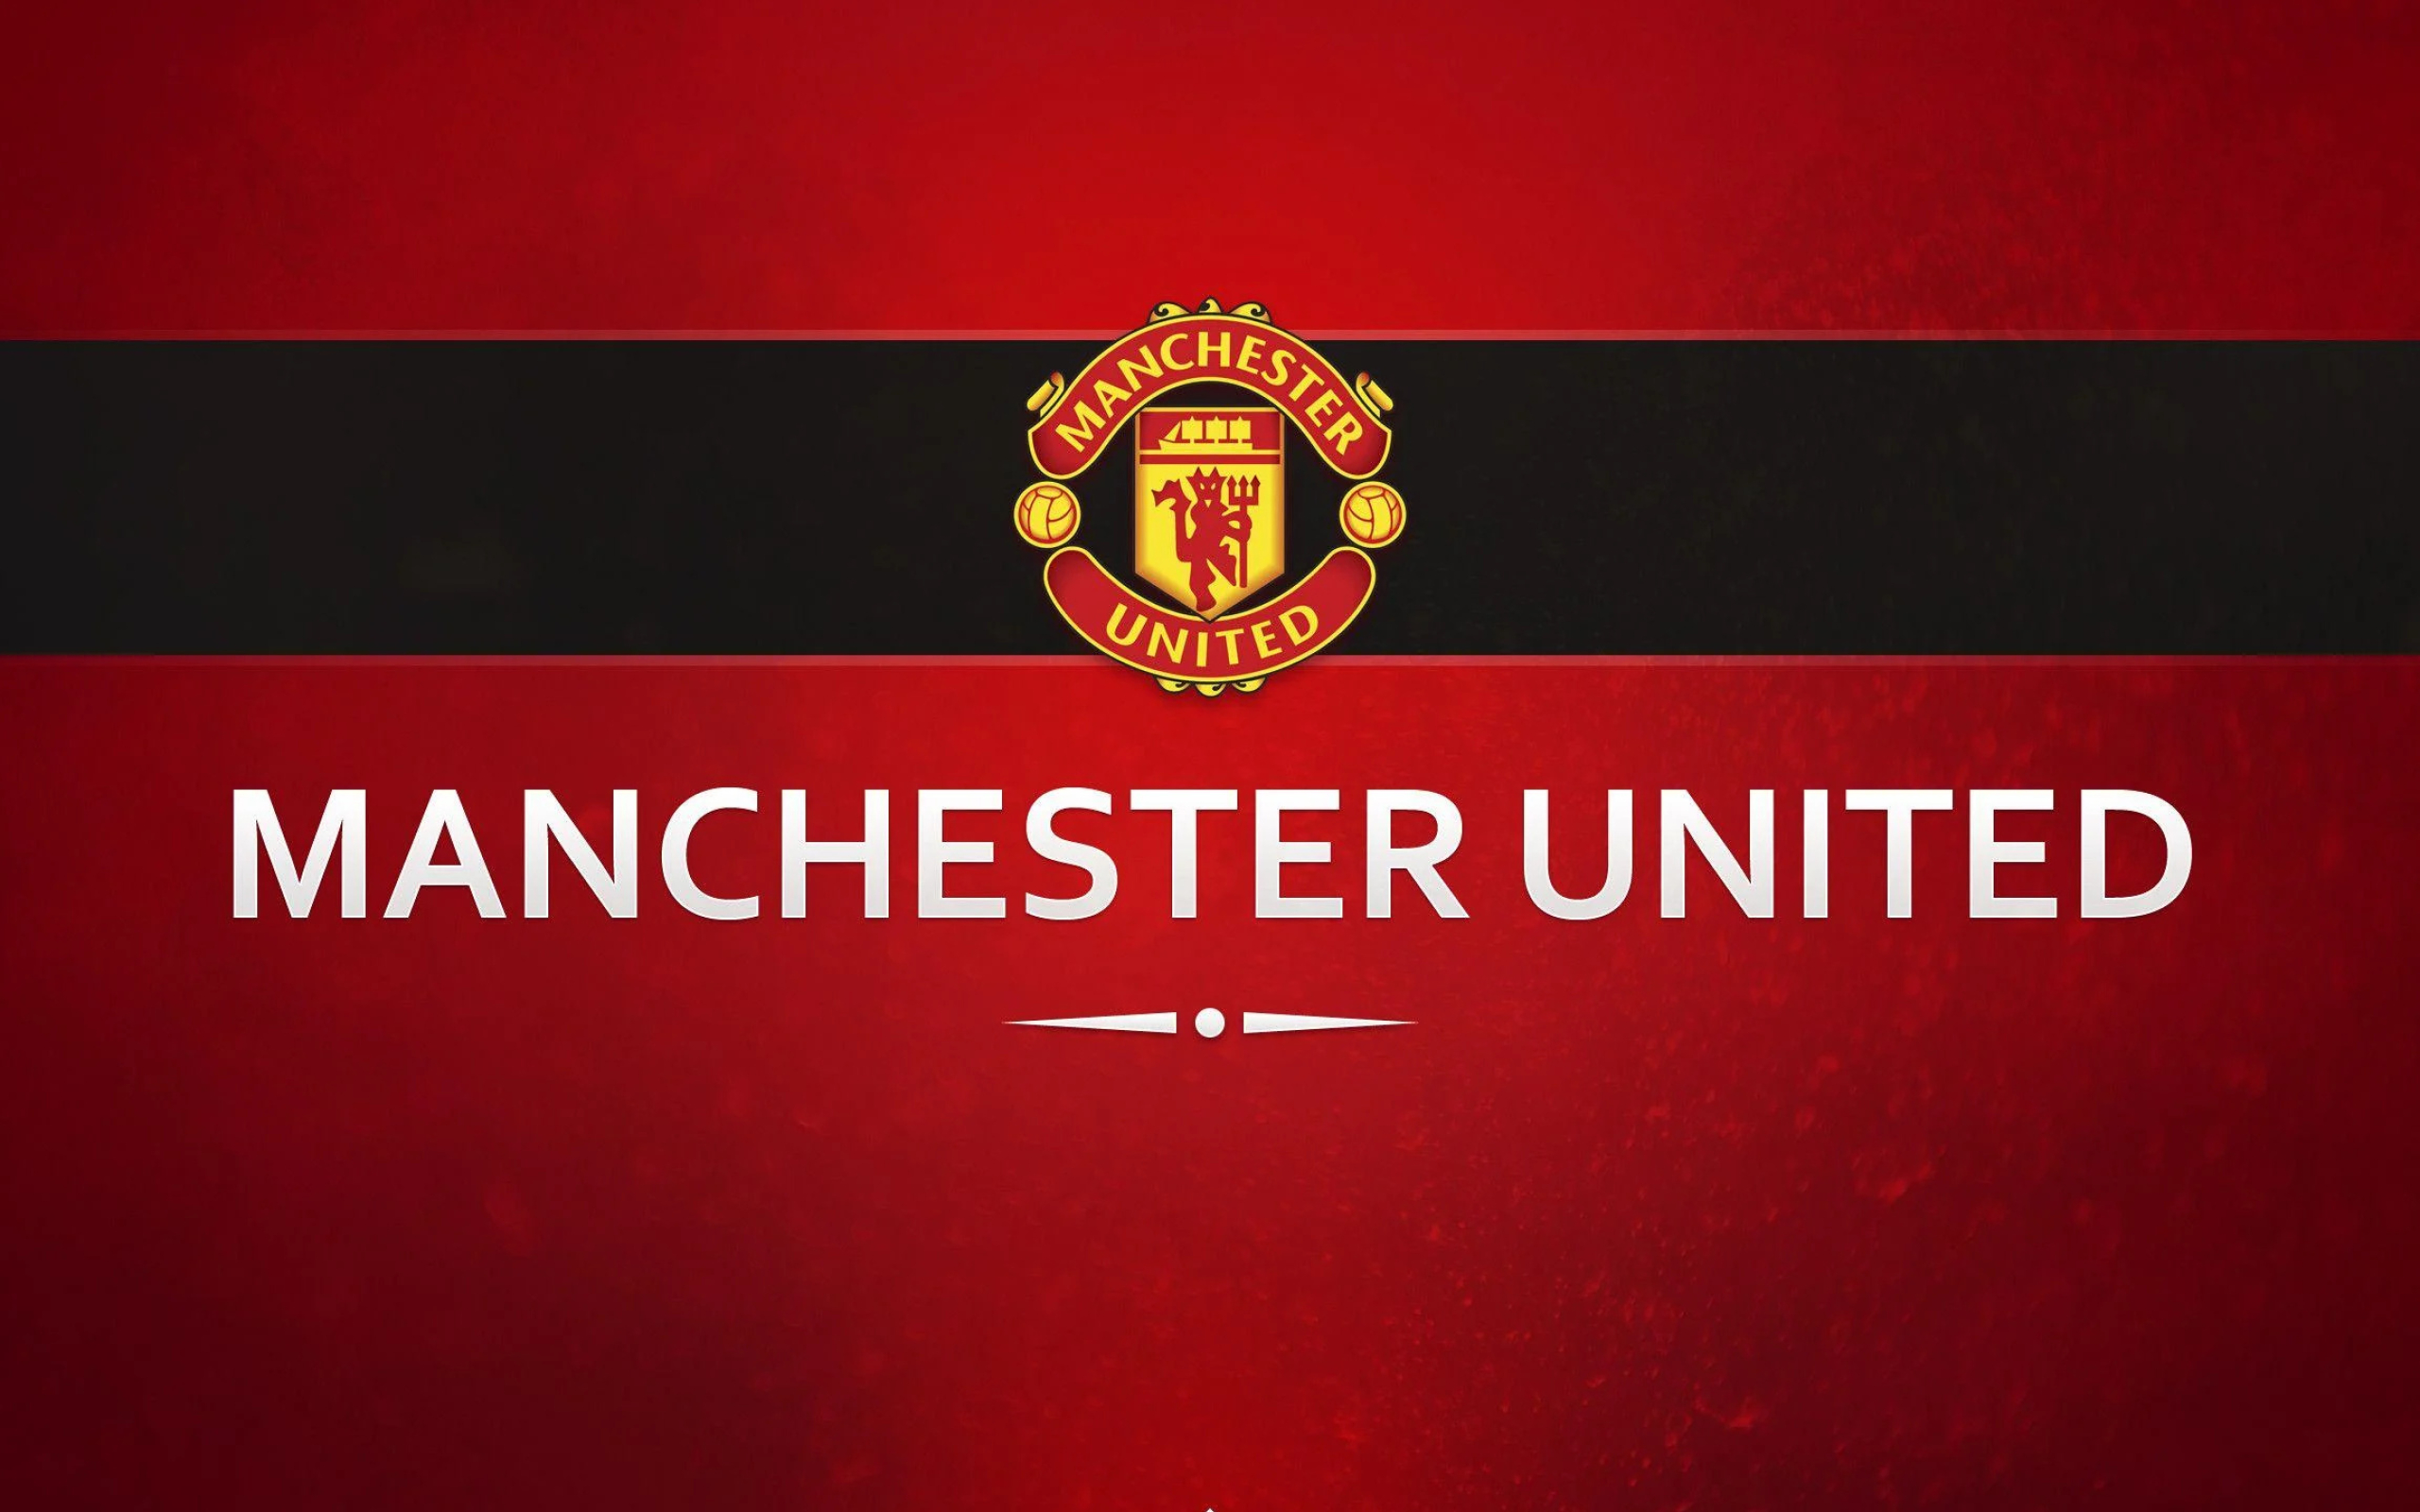 Manchester United, Striking desktop wallpapers, Distinctive design, Dynamic visuals, 2560x1600 HD Desktop